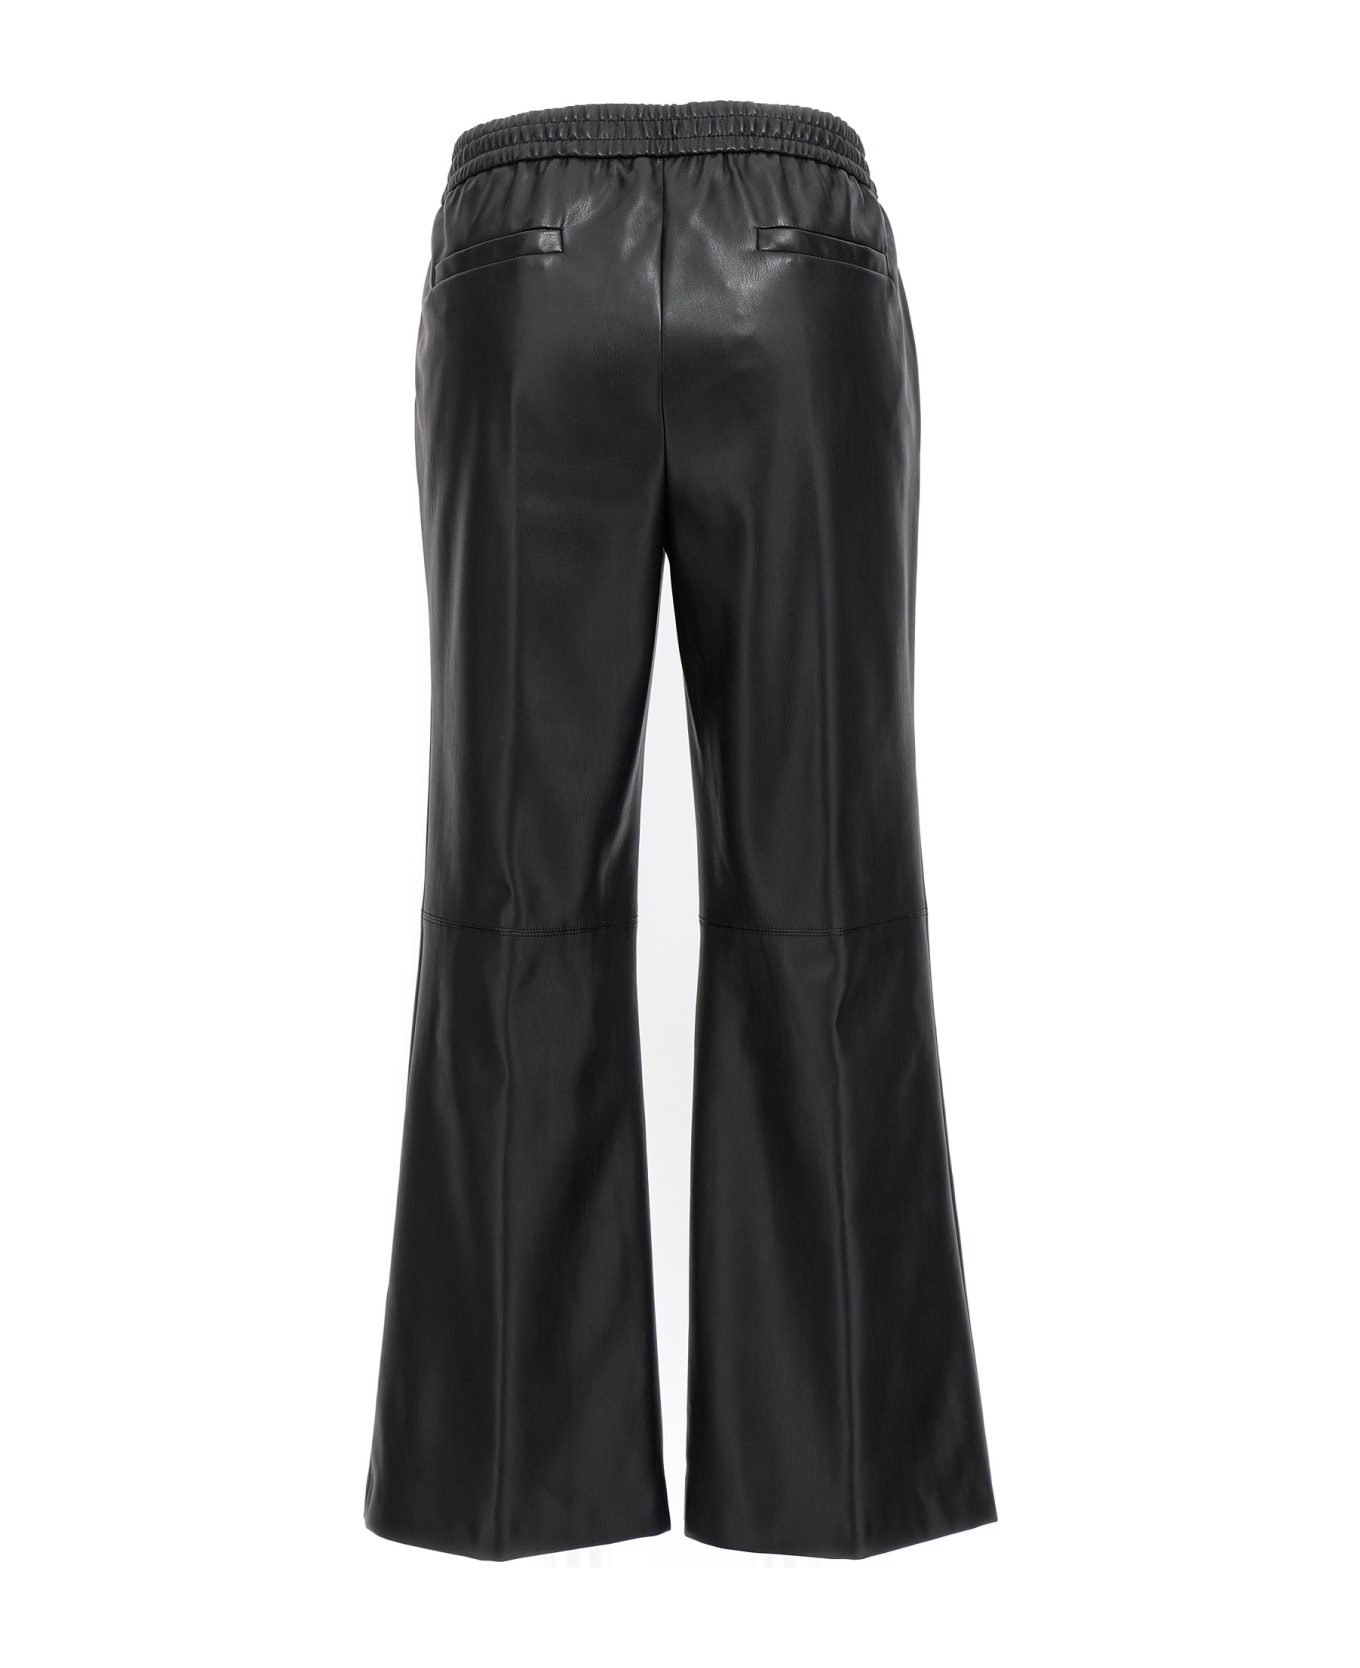 (nude) Eco Leather Pants - Black  